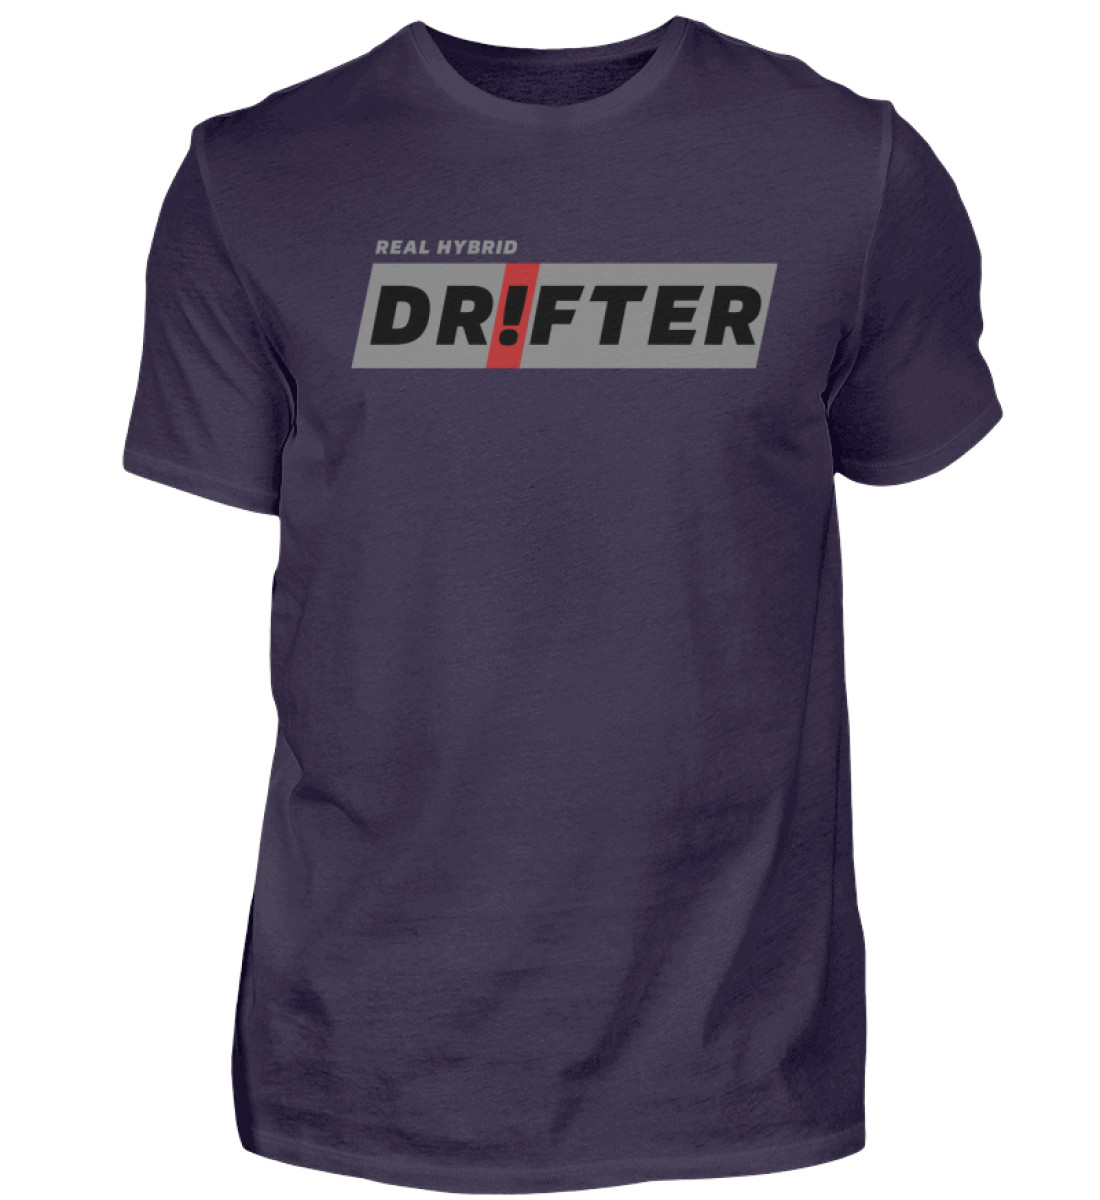 Real Hybrid Drifter - Herren Premiumshirt-2911